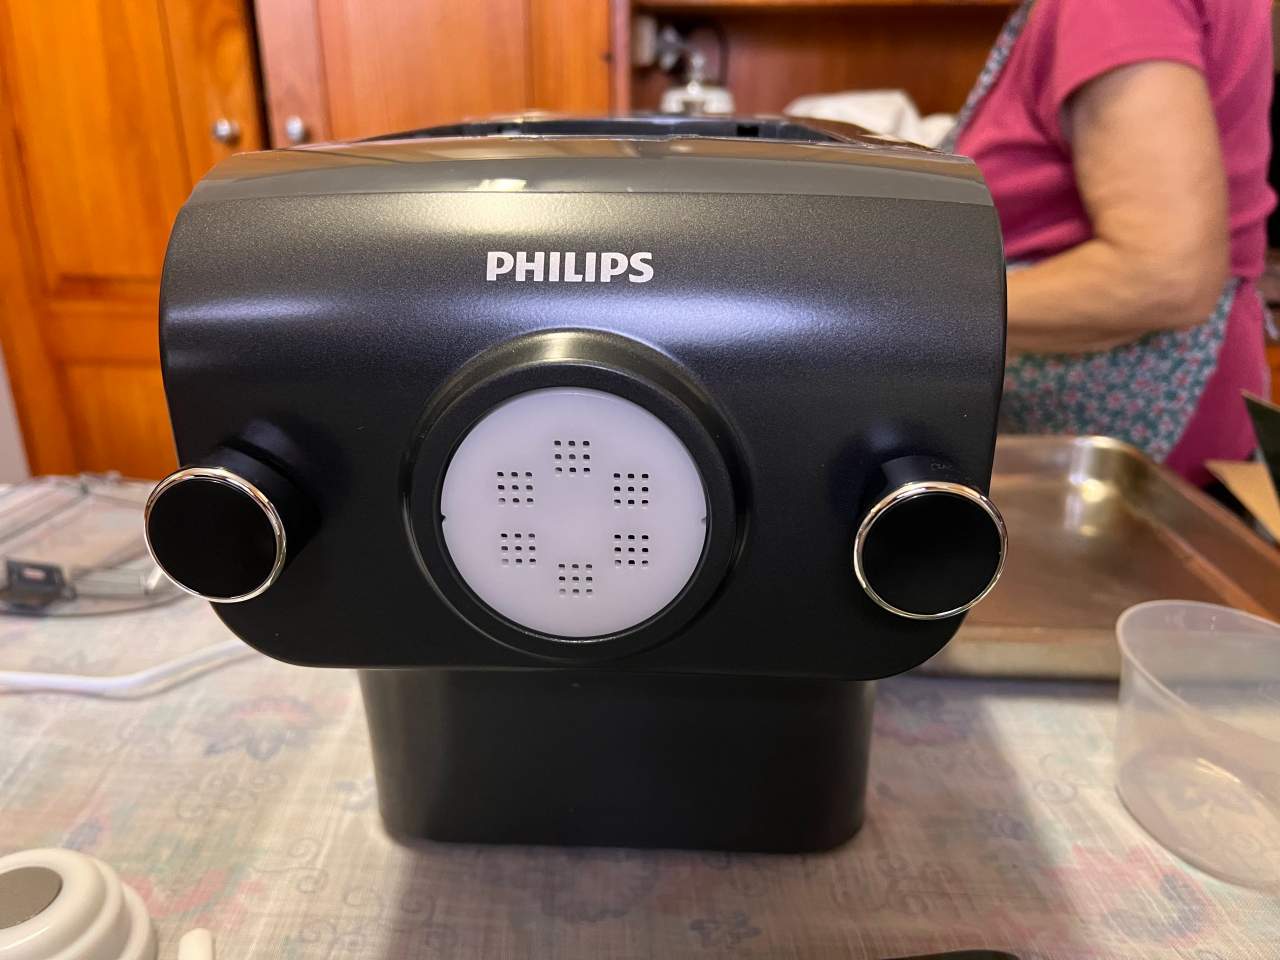 Philips pasta maker review. Image: Lifehacker Australia/Stephanie Nuzzo